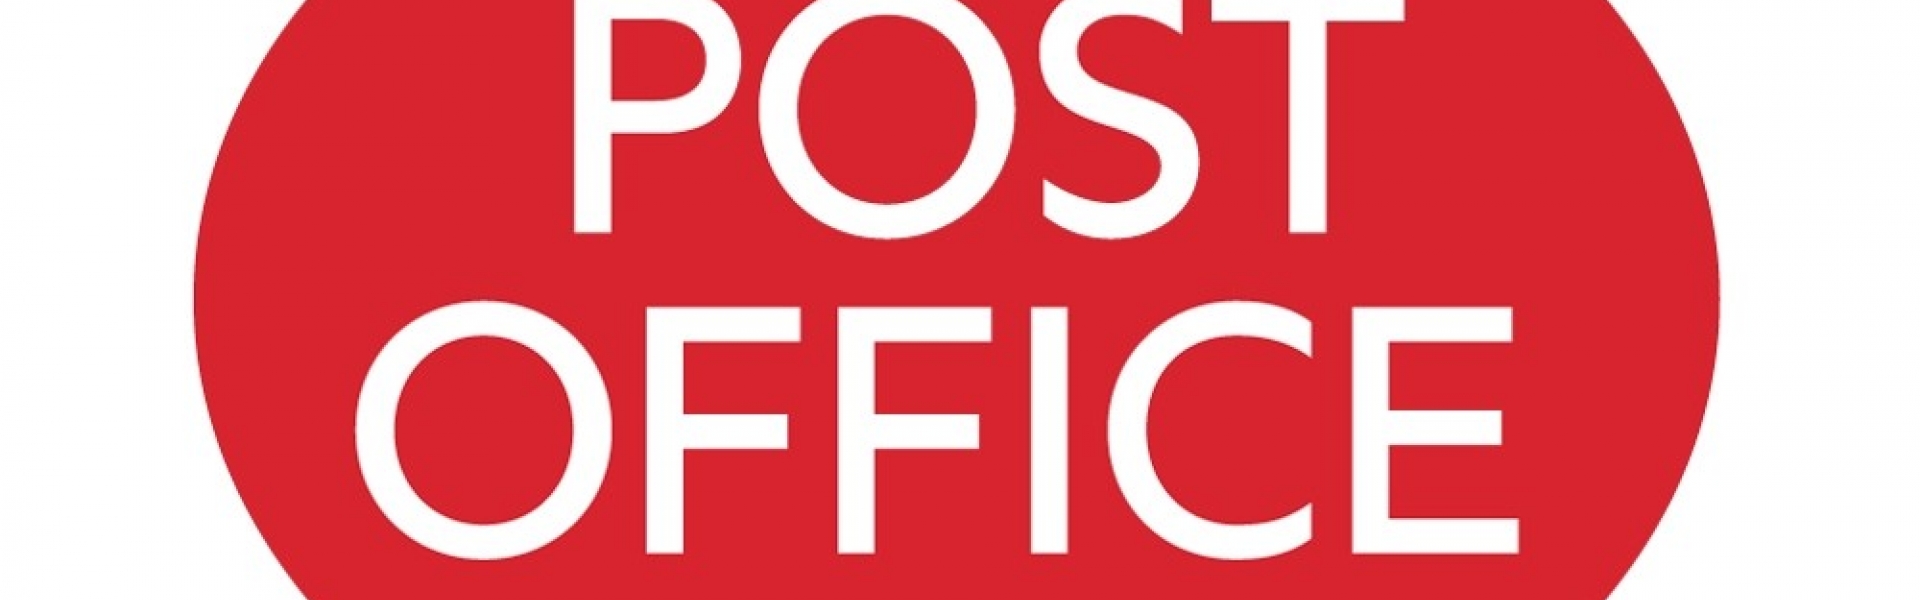 Eastleigh Post Office